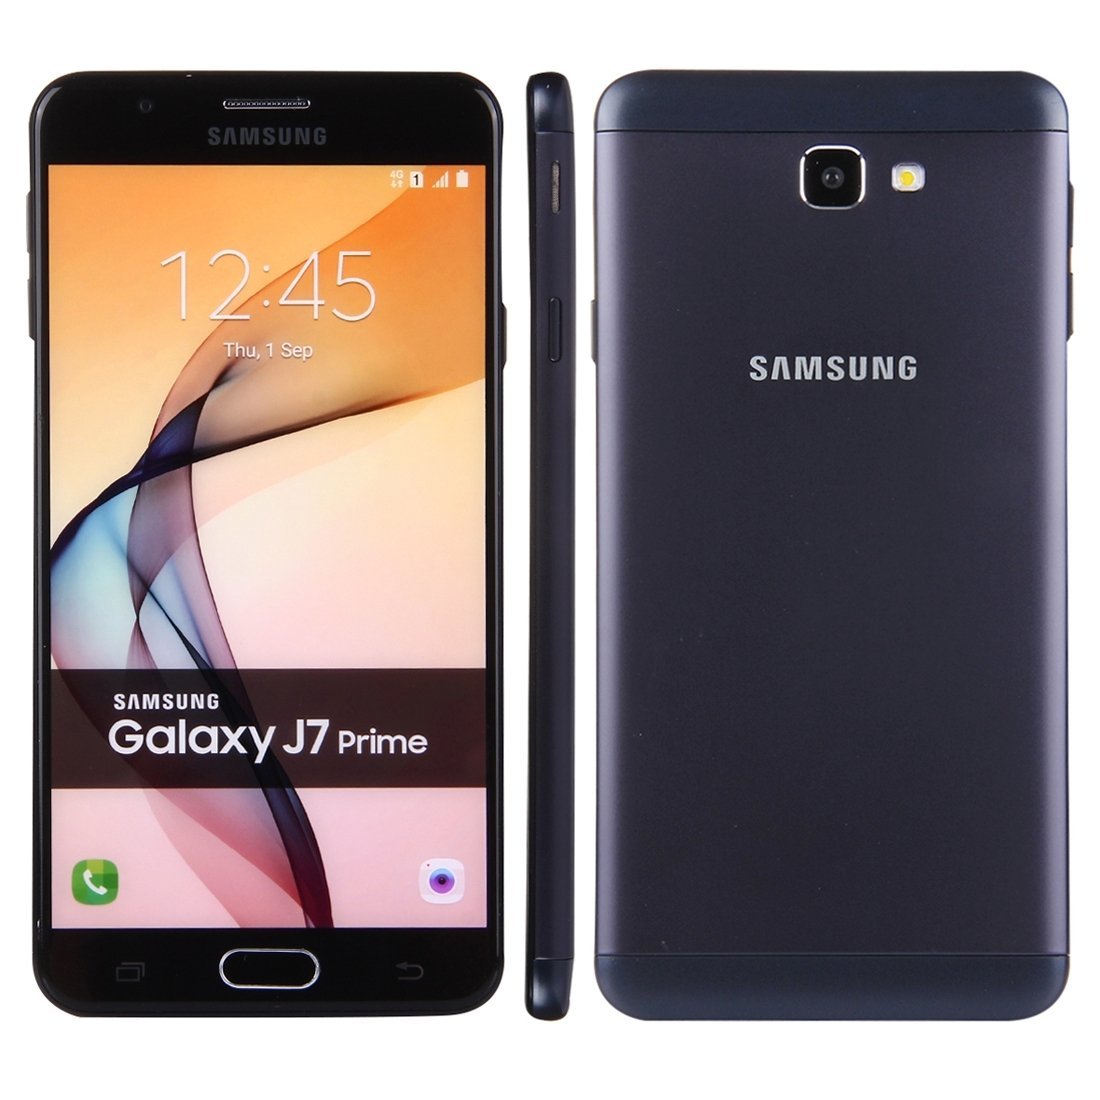 Samsung Galaxy J7 Prime 2 Hard Reset